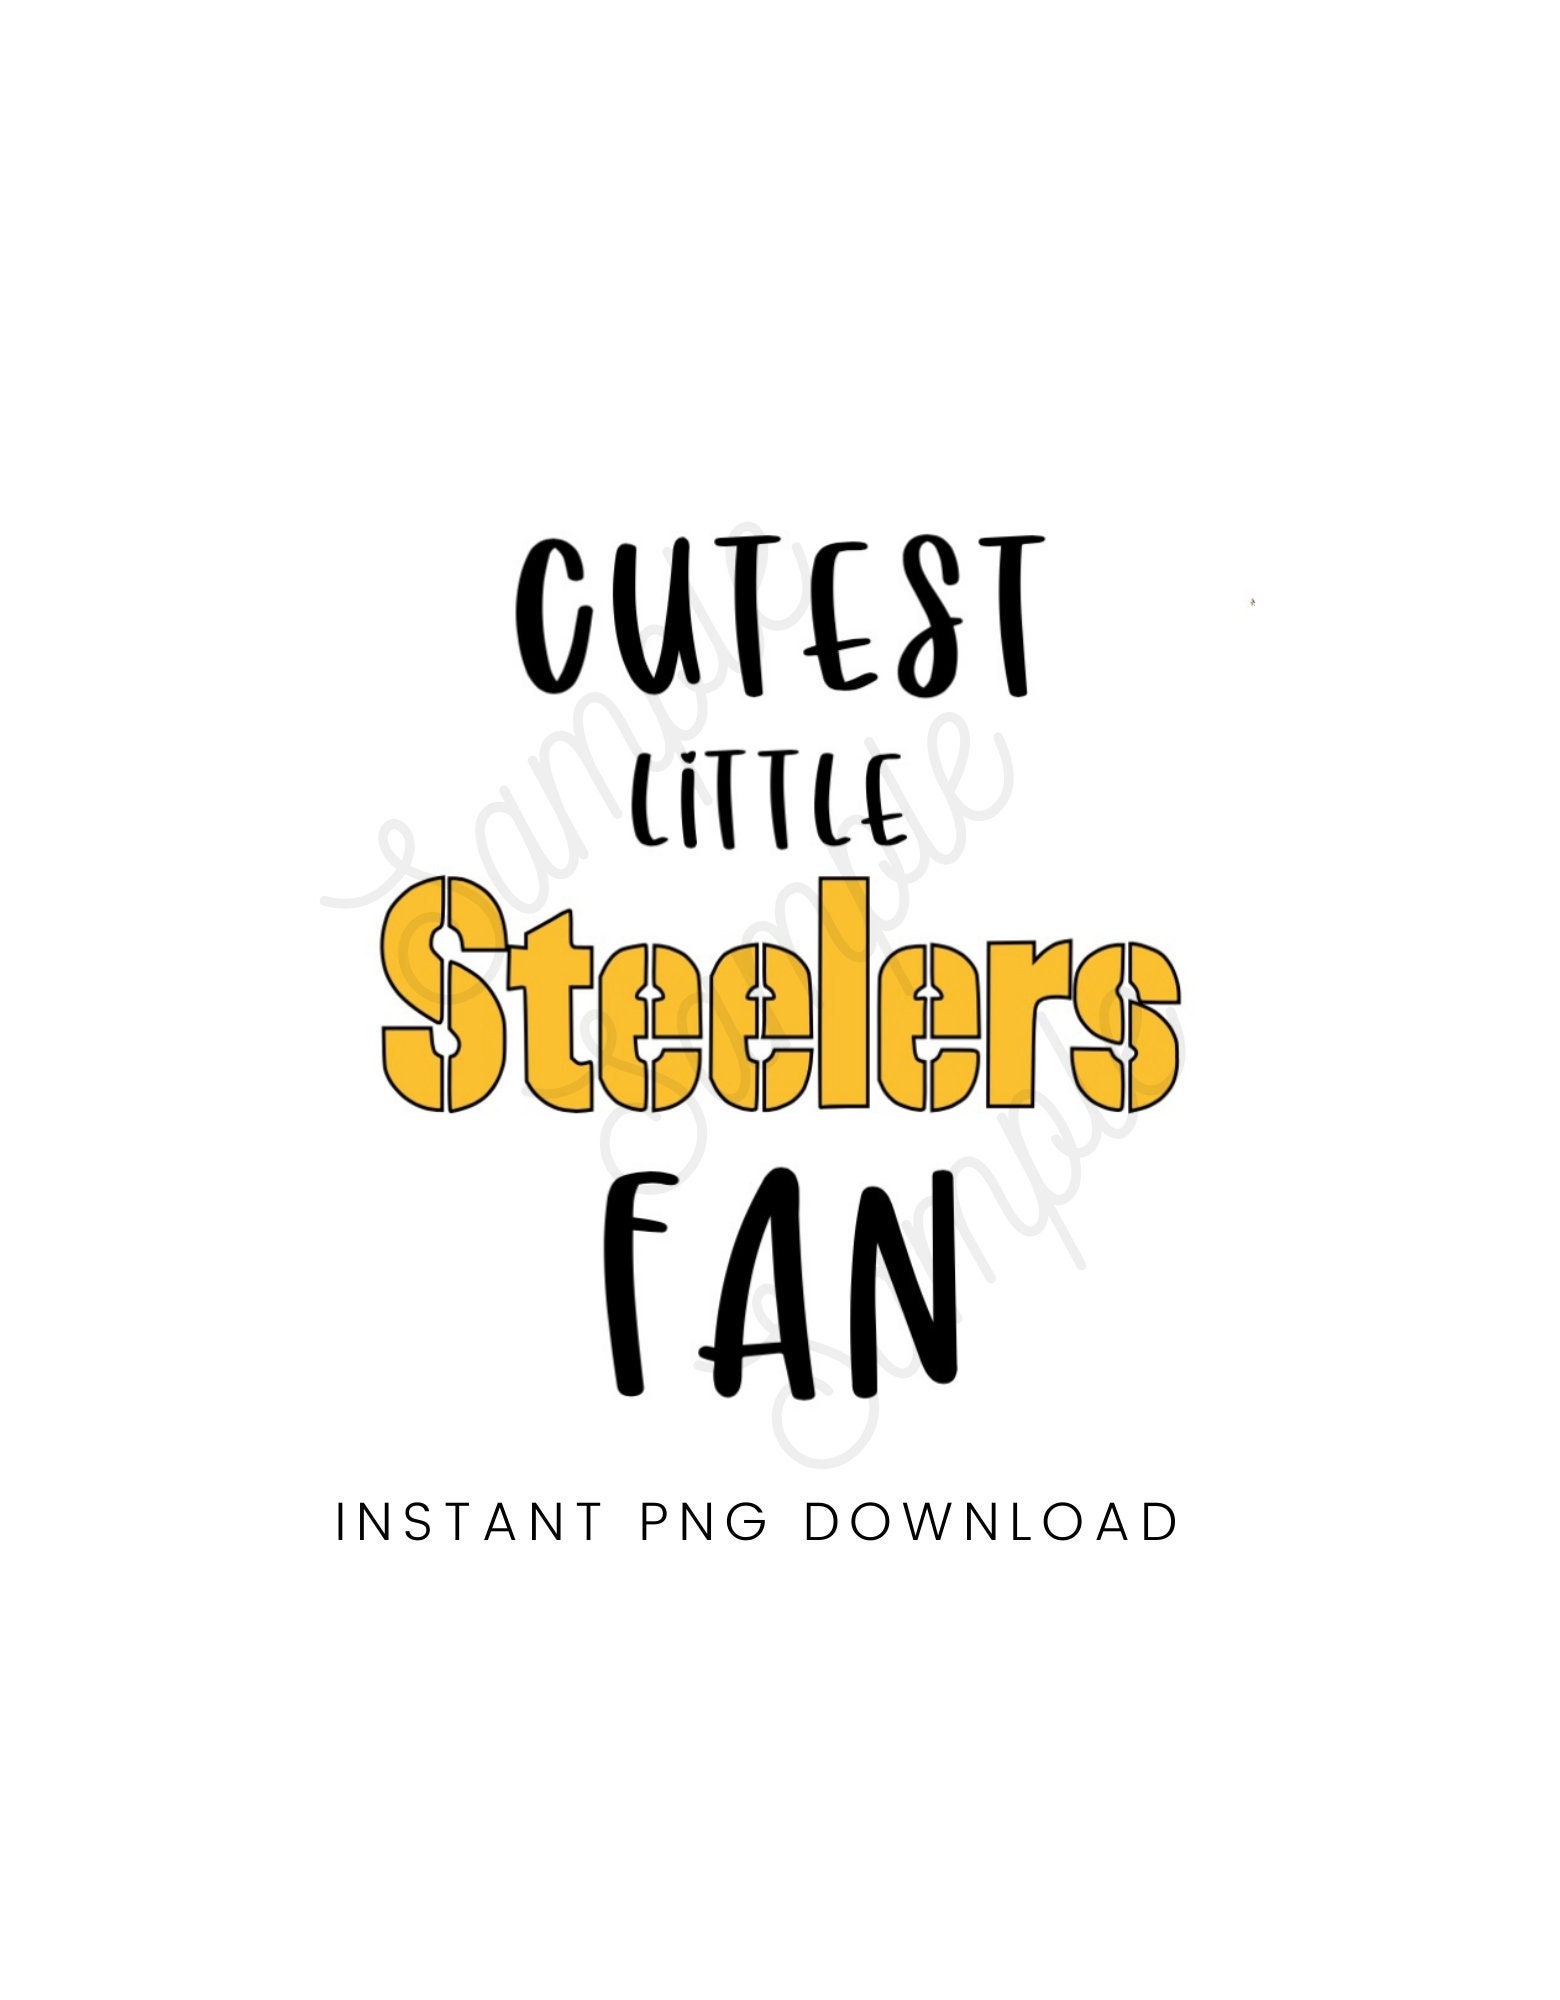 Pittsburgh Steelers Stars Flag Custom Stencil – My Custom Stencils